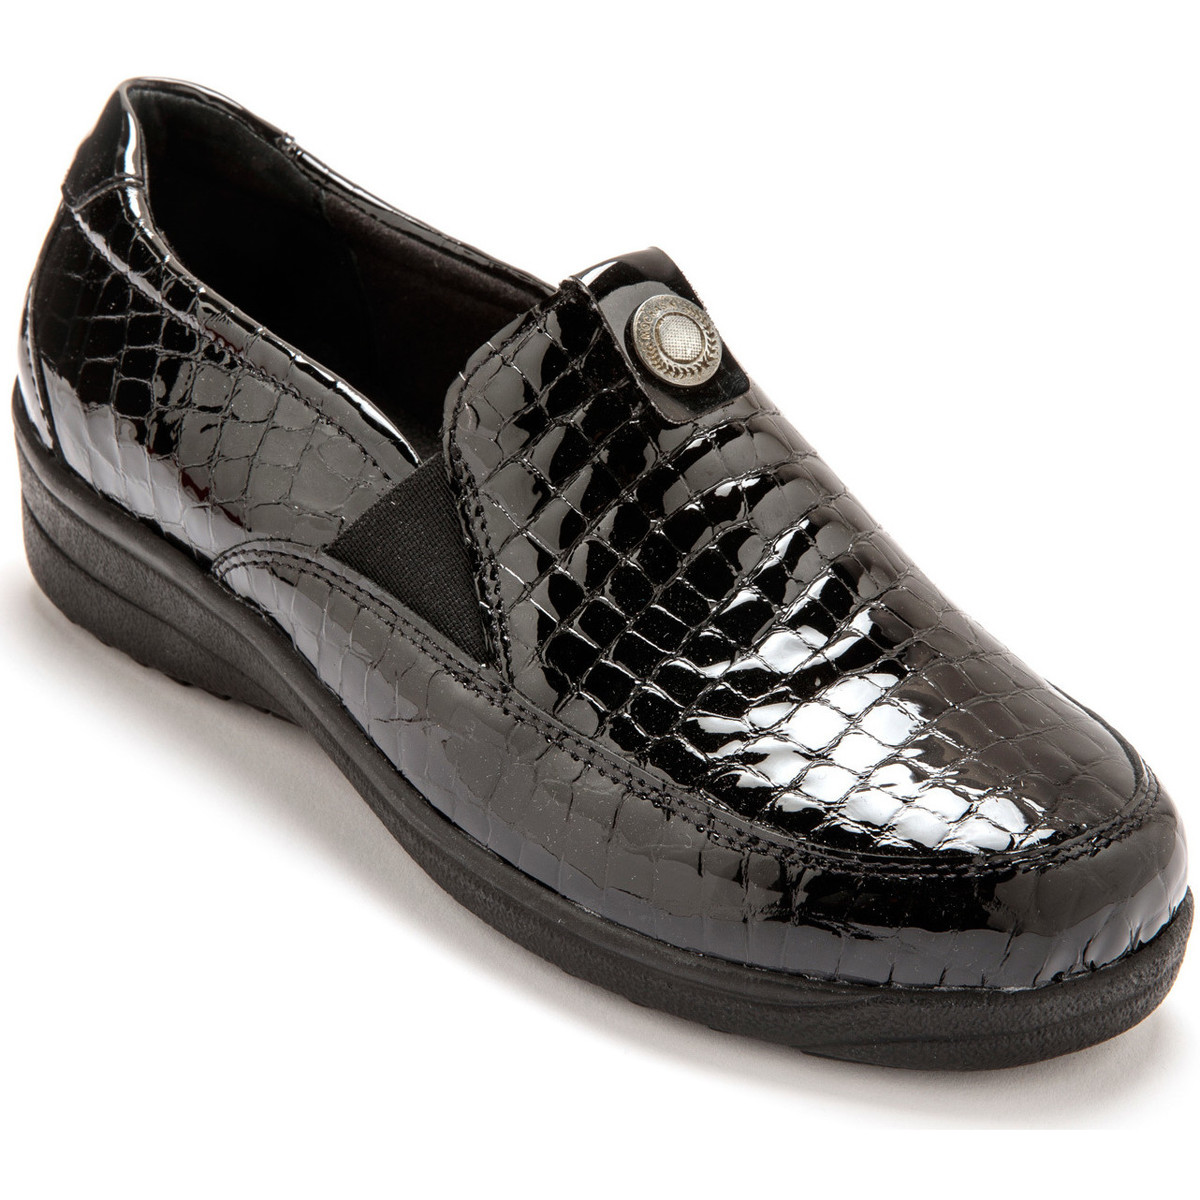 Chaussures Femme Only & Sons Sans-gêne extra larges semelle amovible Noir